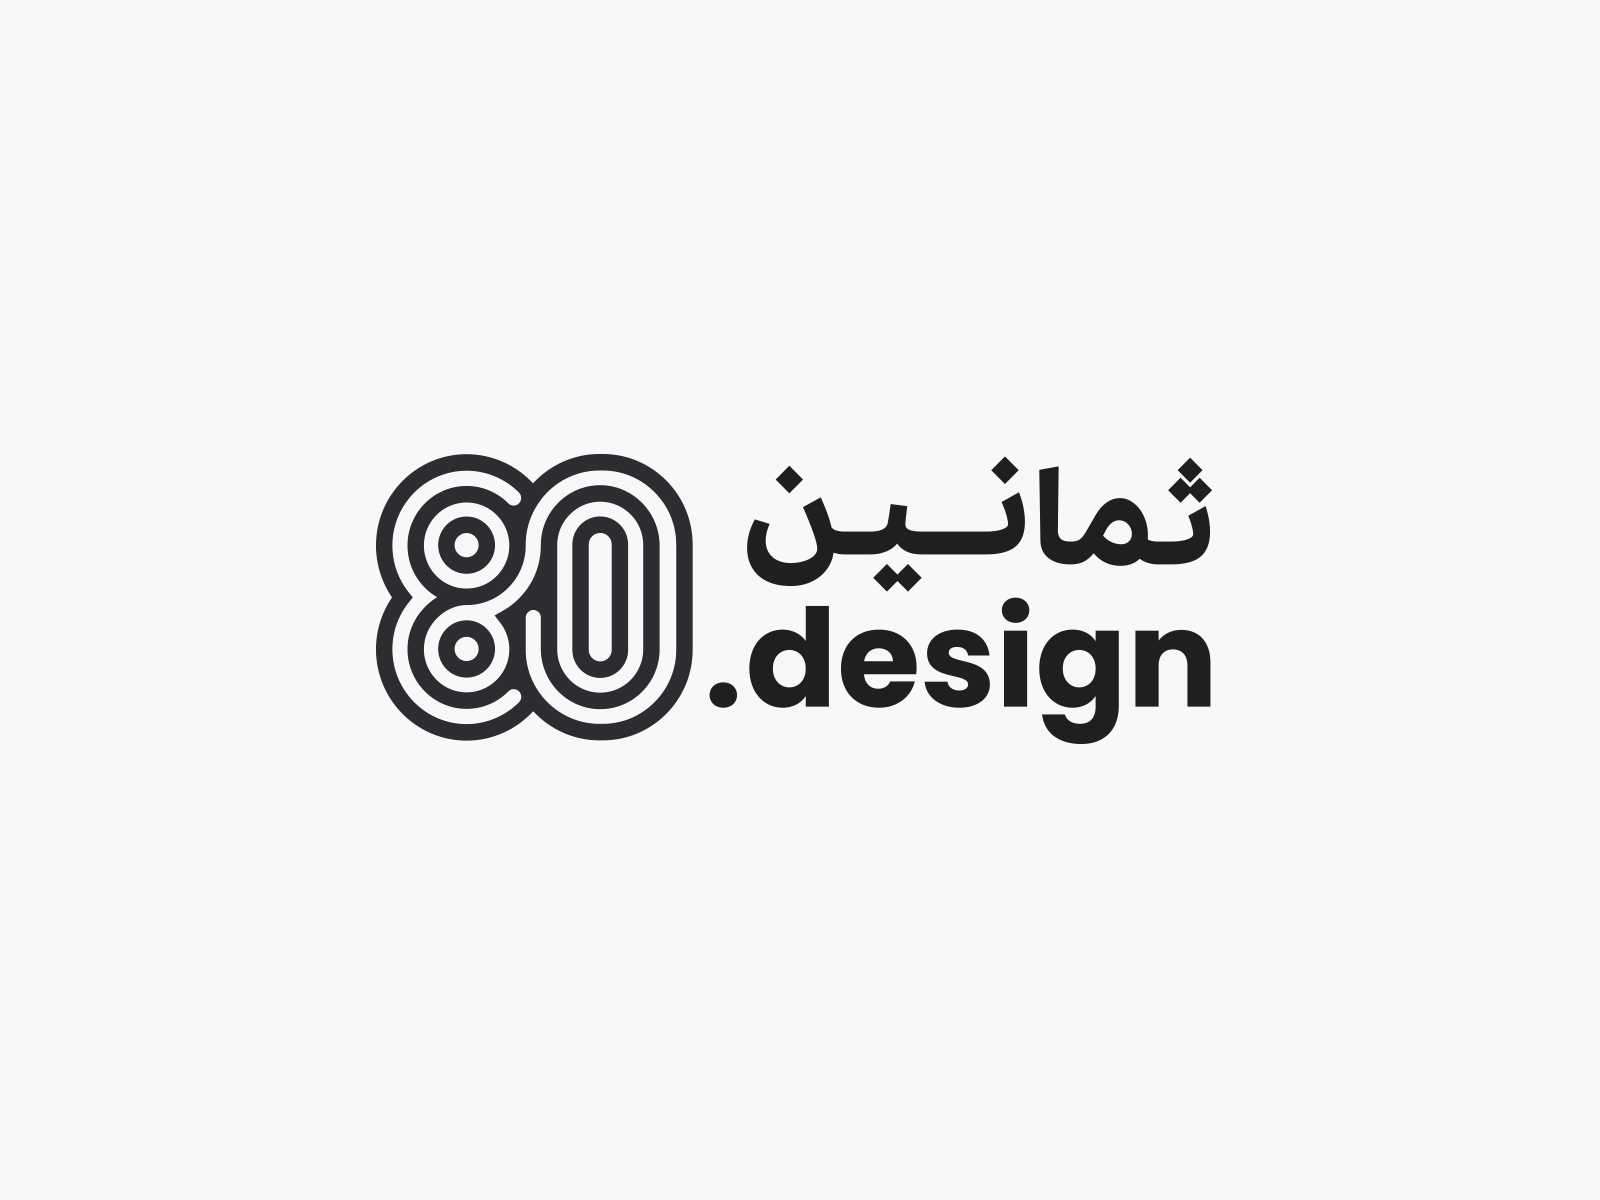 80 dot design Logo by Mo, Alyoussfi on Dribbble